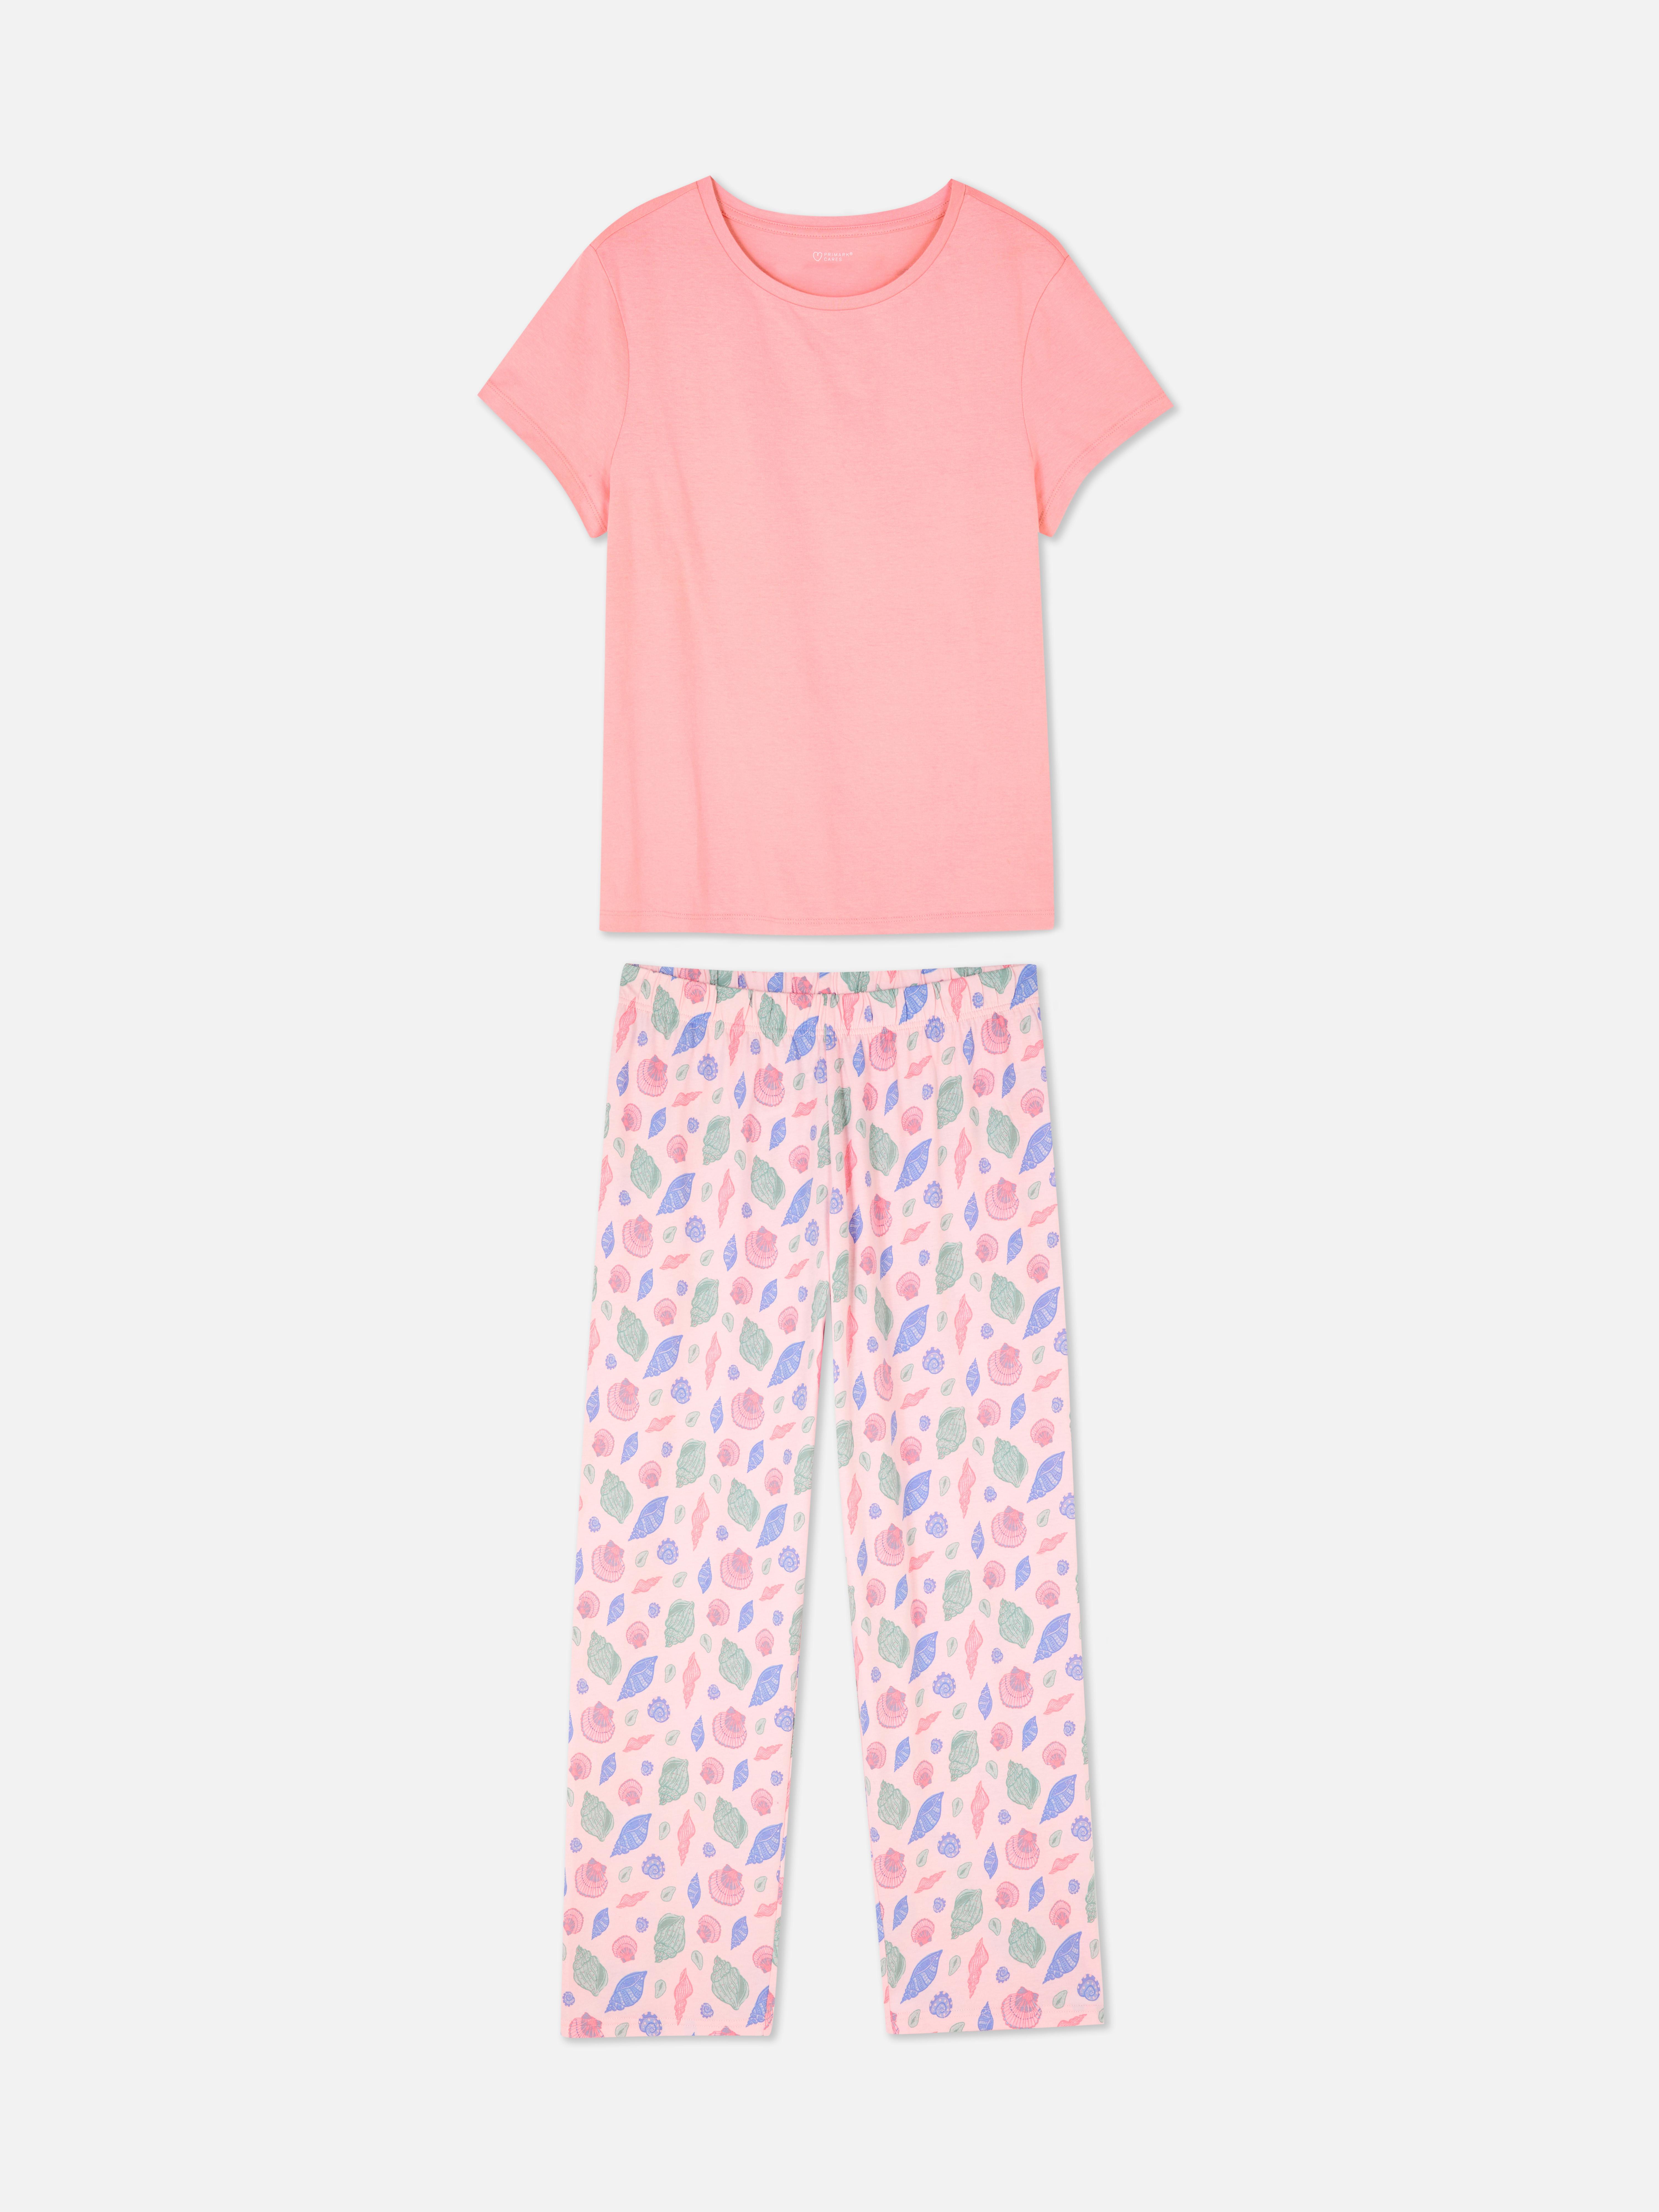 Pijama de manga corta estampado